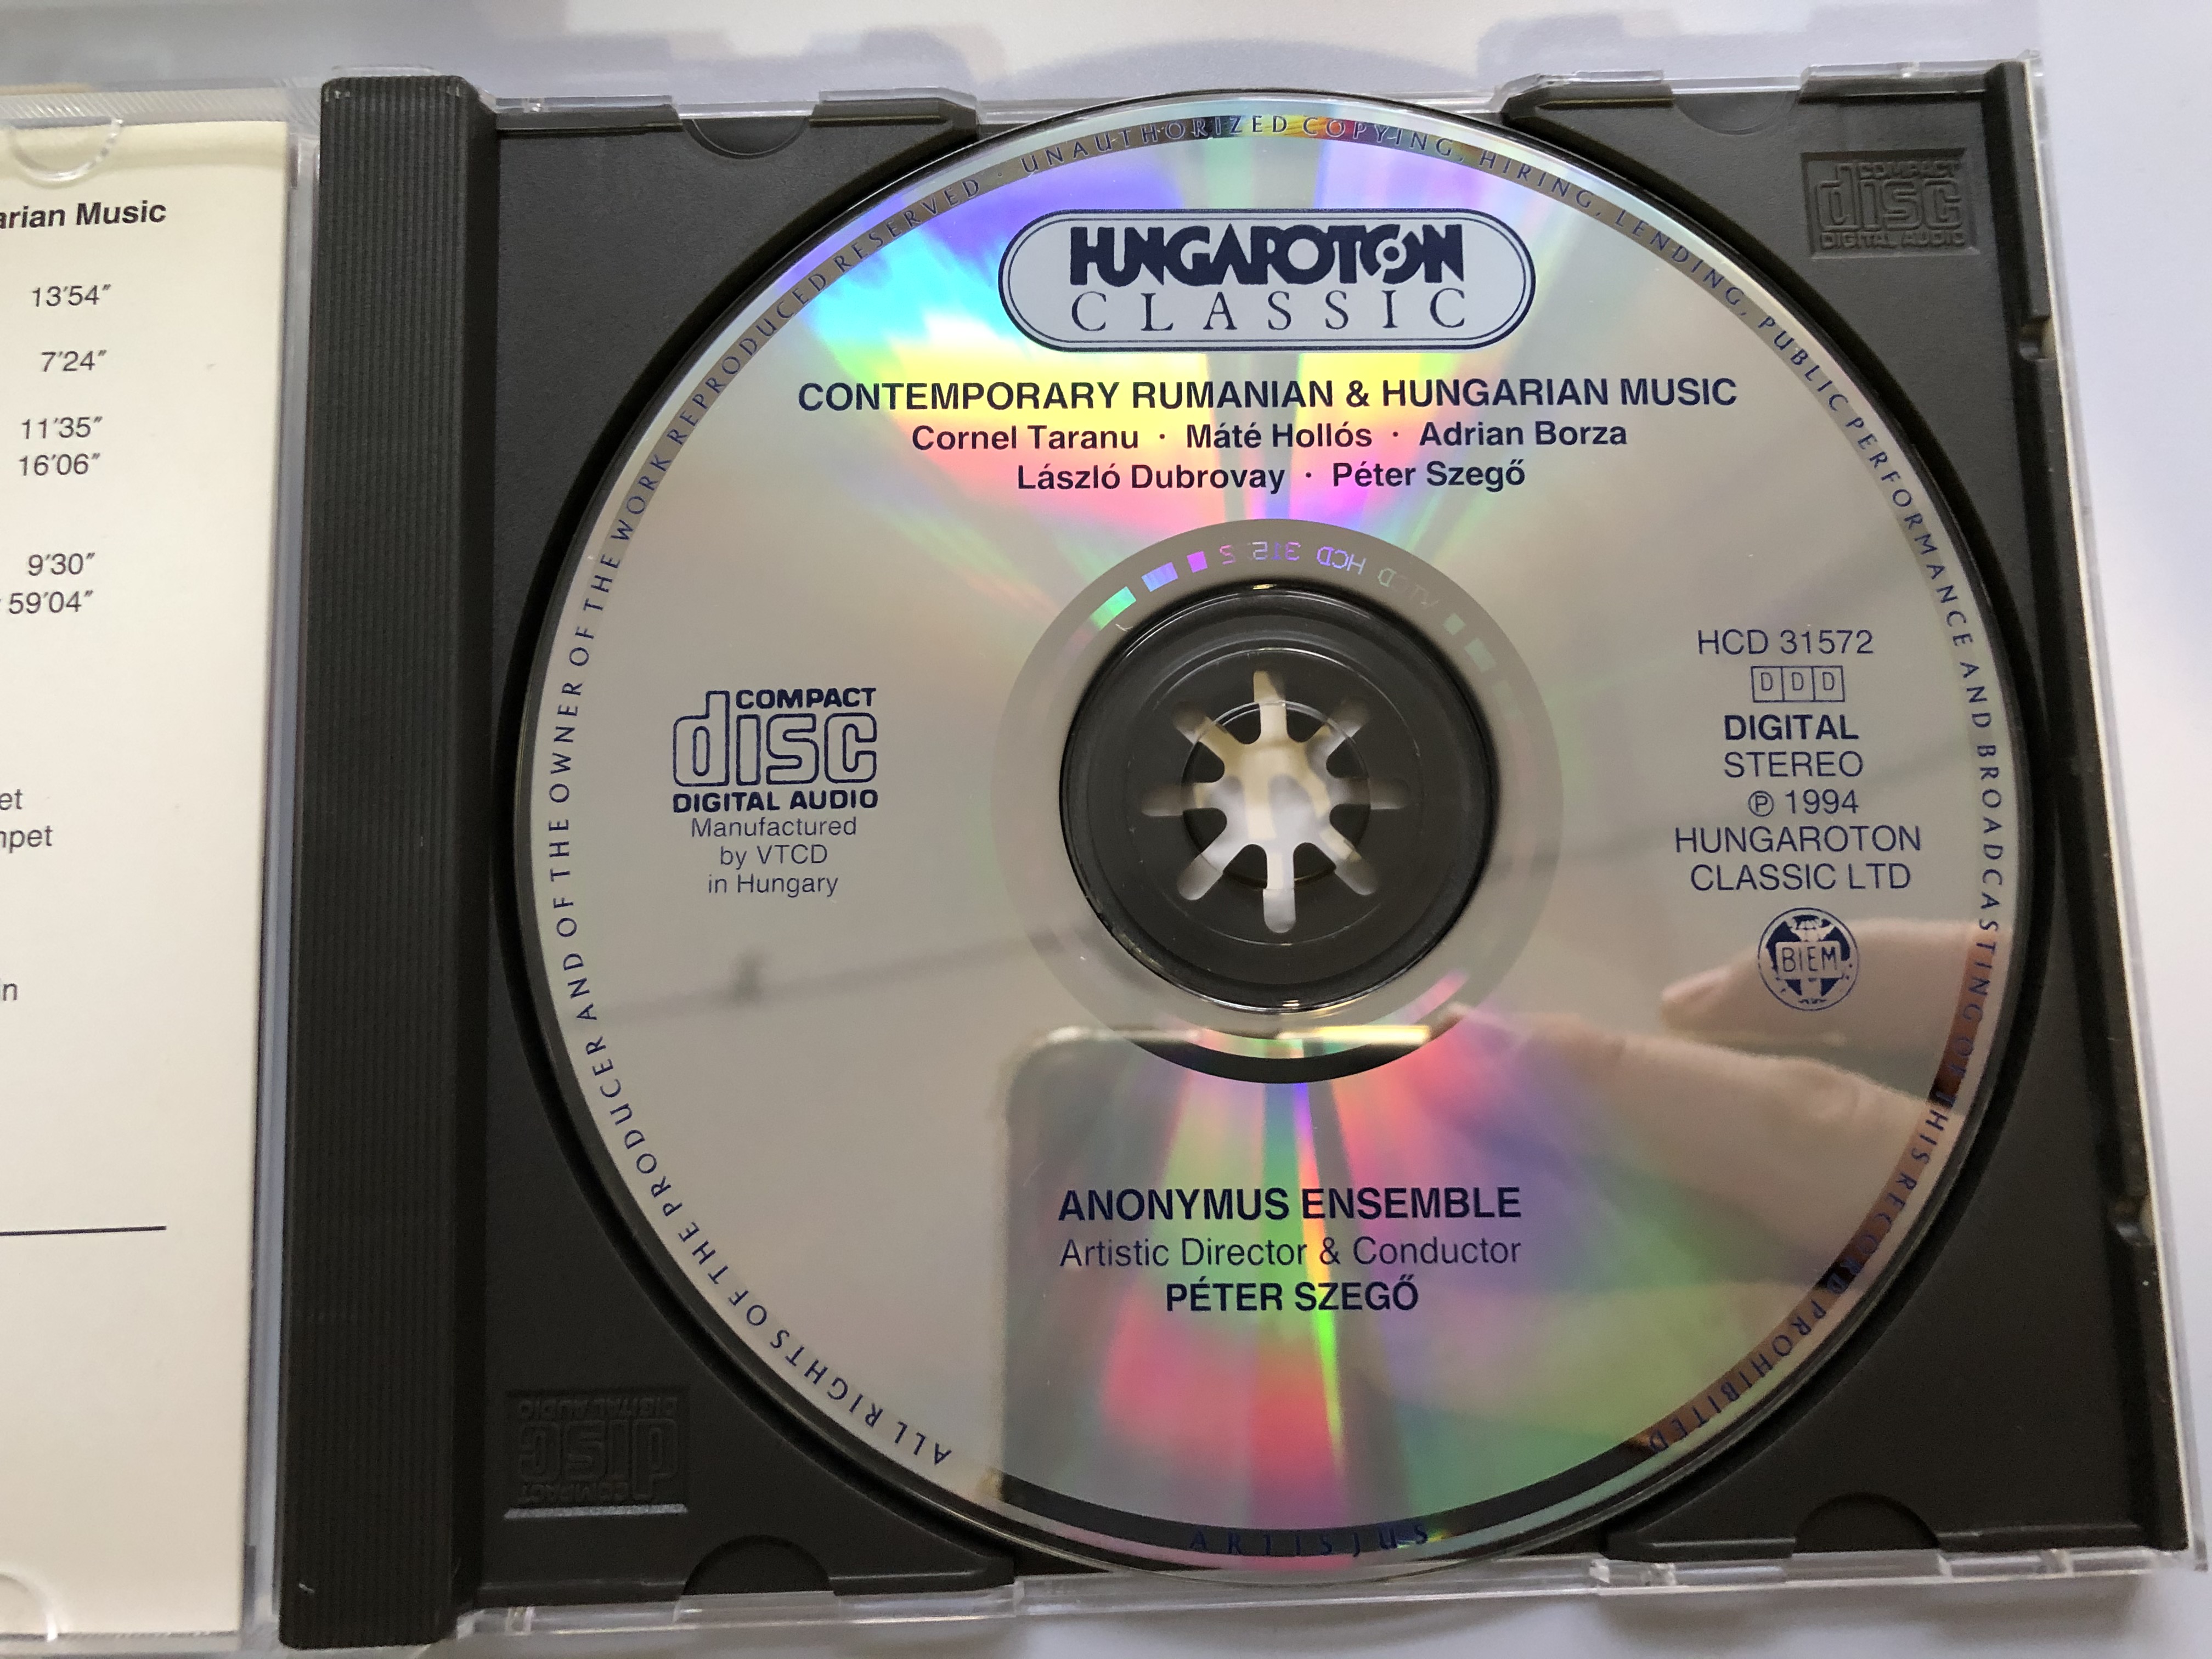 contemporary-rumanian-hungarian-music-taranau-holl-s-borza-dubrovay-szeg-ensemble-anonymus-peter-szego-hungaroton-classic-audio-cd-1994-stereo-hcd-31572-5-.jpg